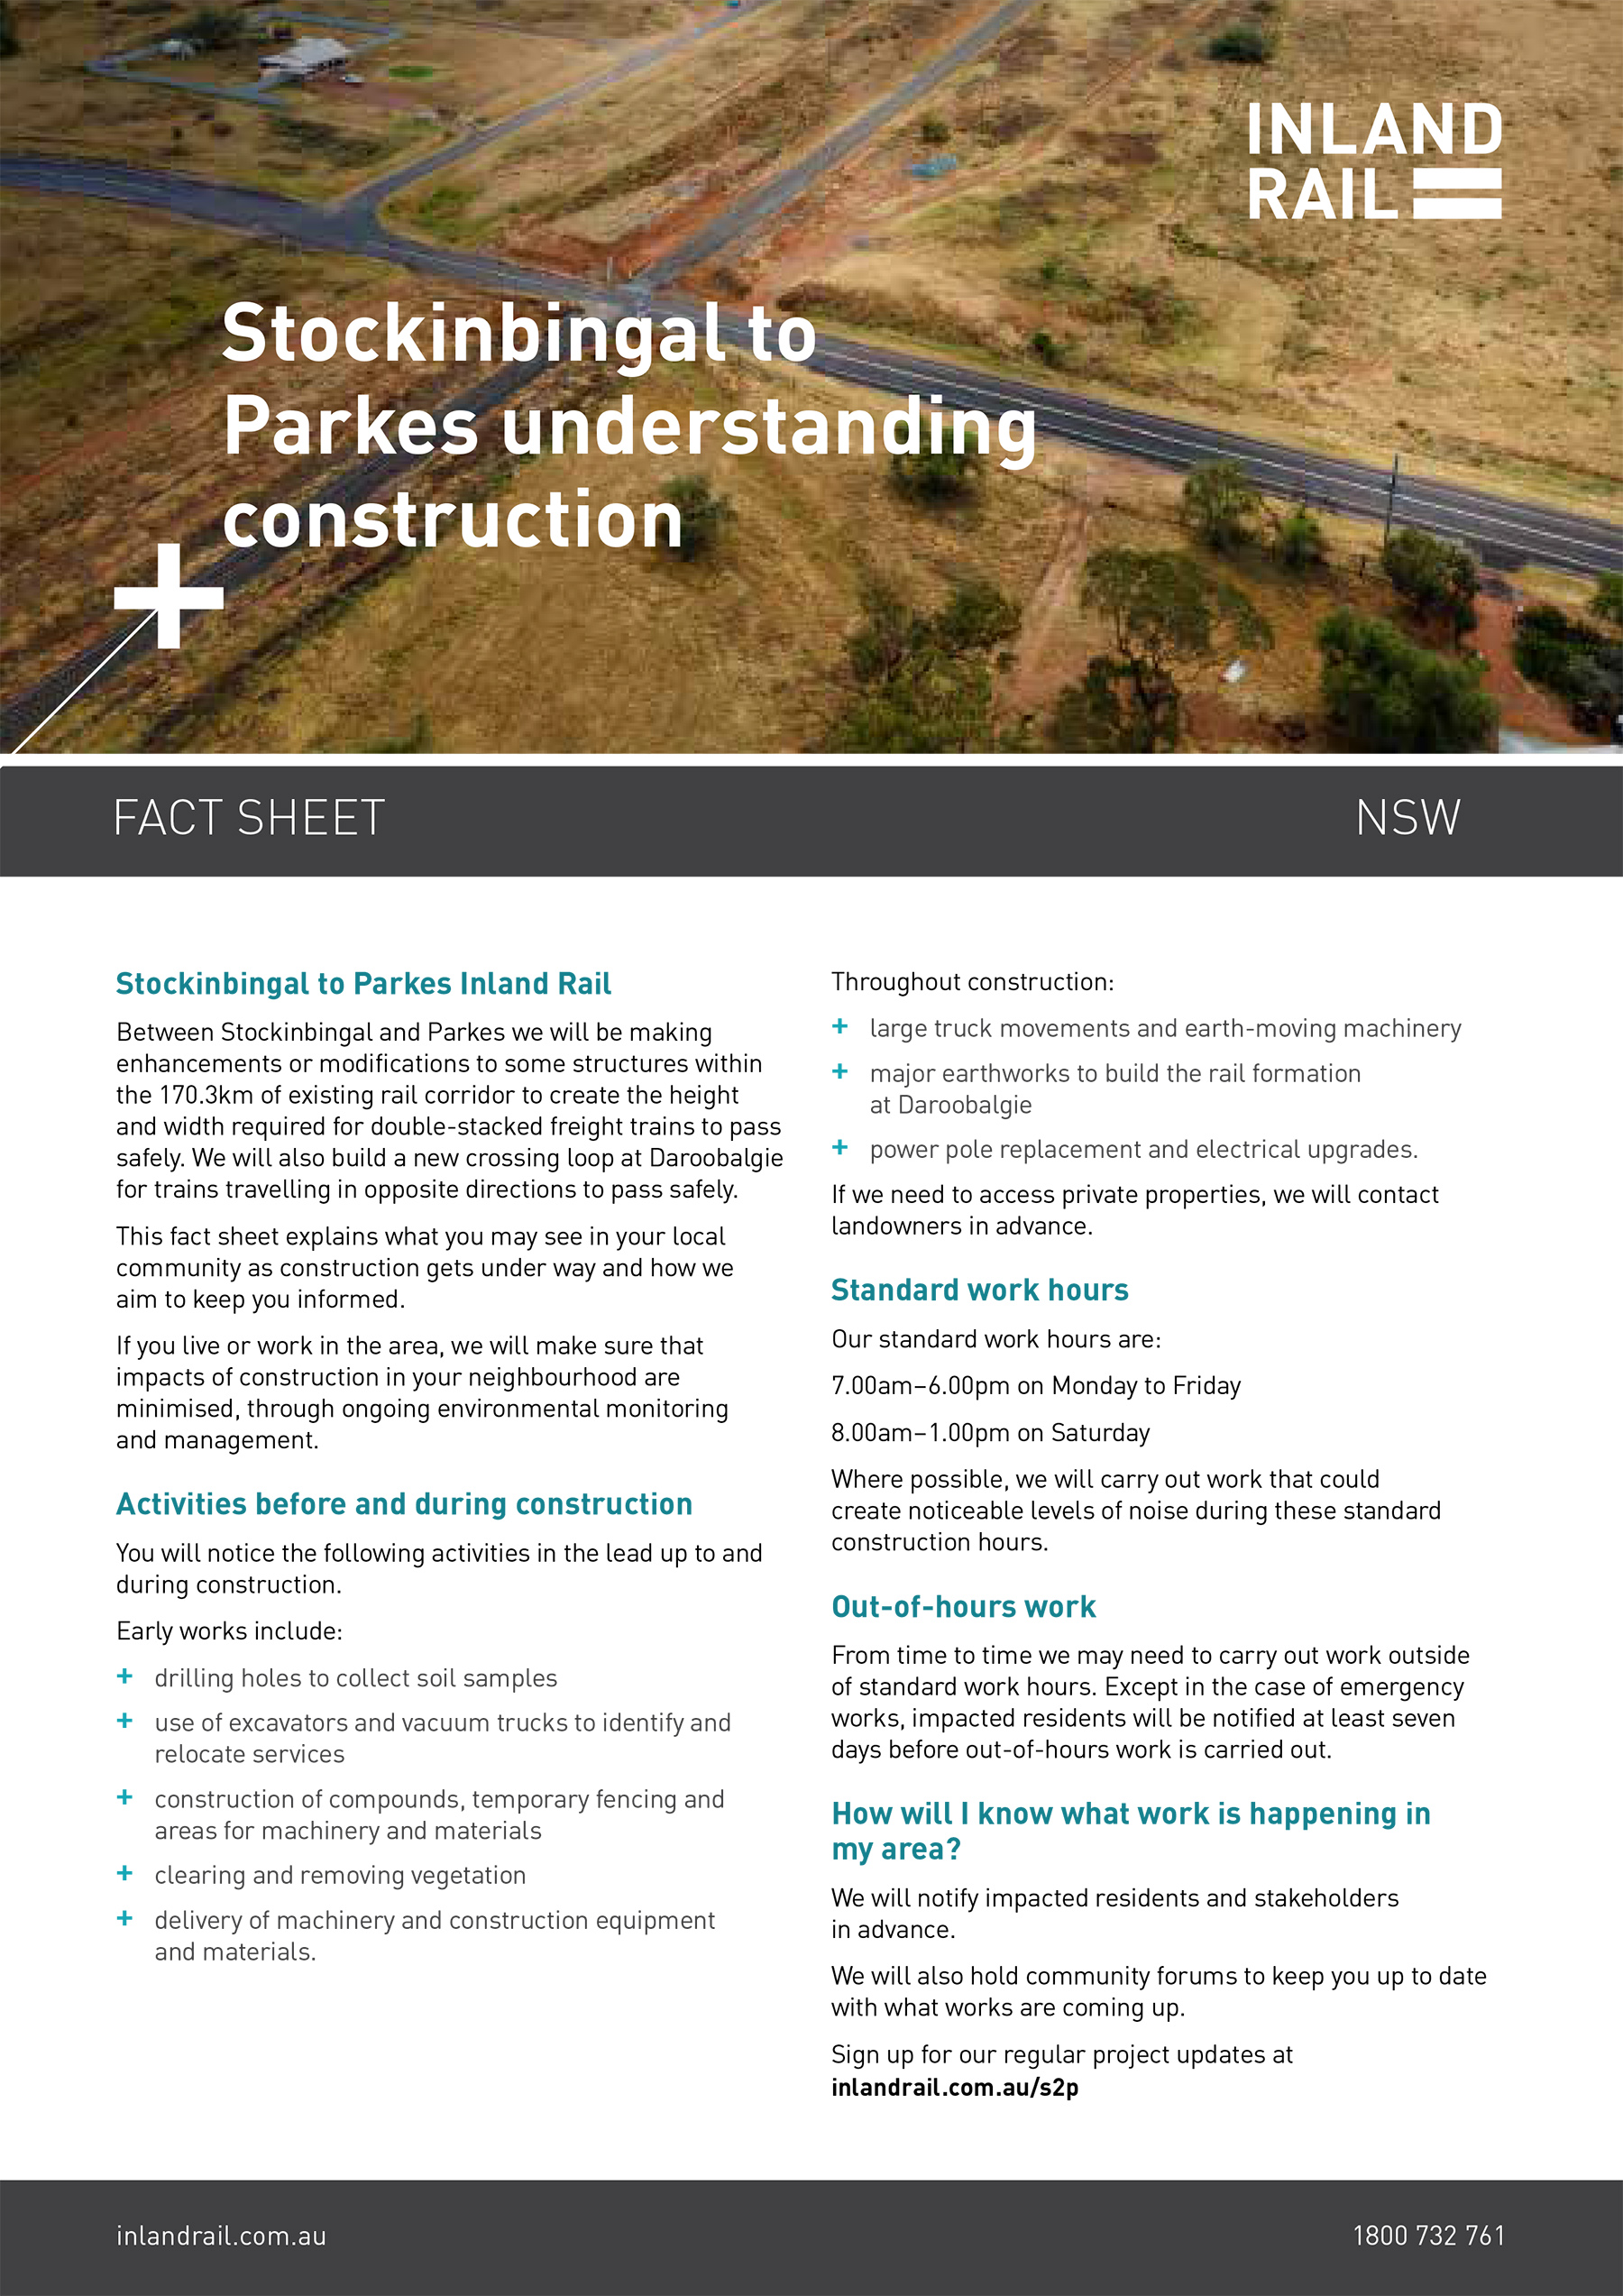 Stockinbingal to Parkes understanding construction factsheet